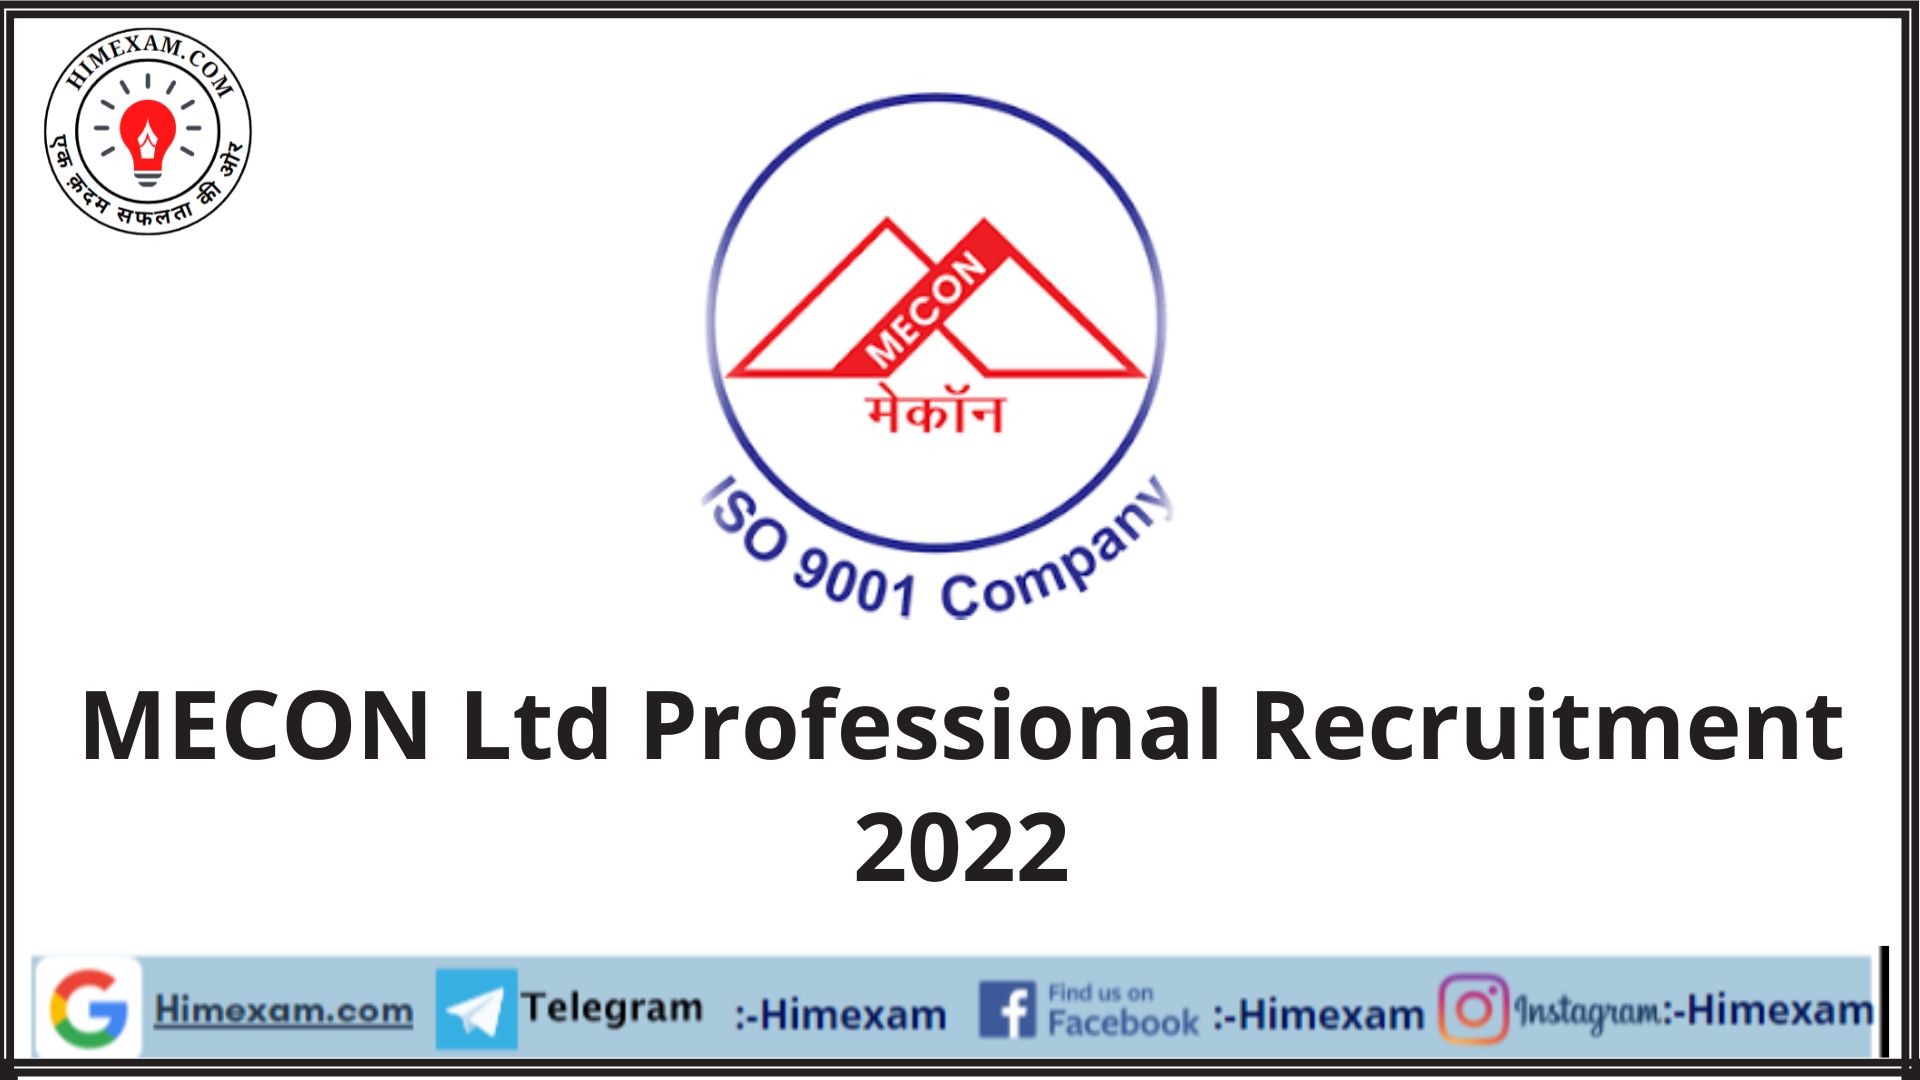 MECON Ltd Professional Recruitment 2022